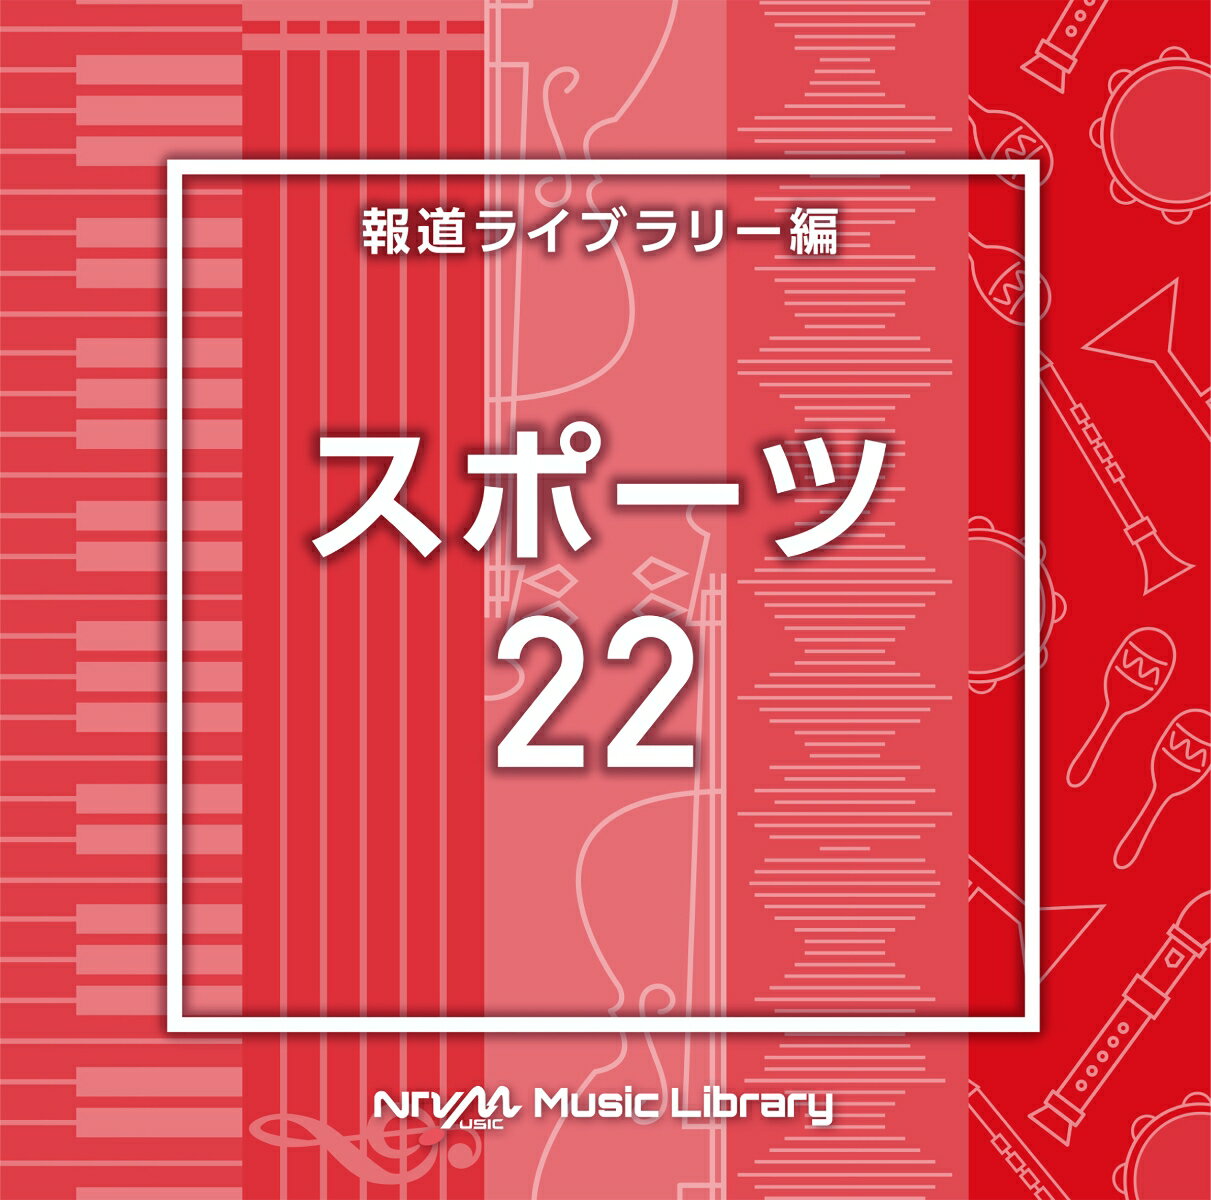 NTVM Music Library 報道ライブラリー編 スポーツ22